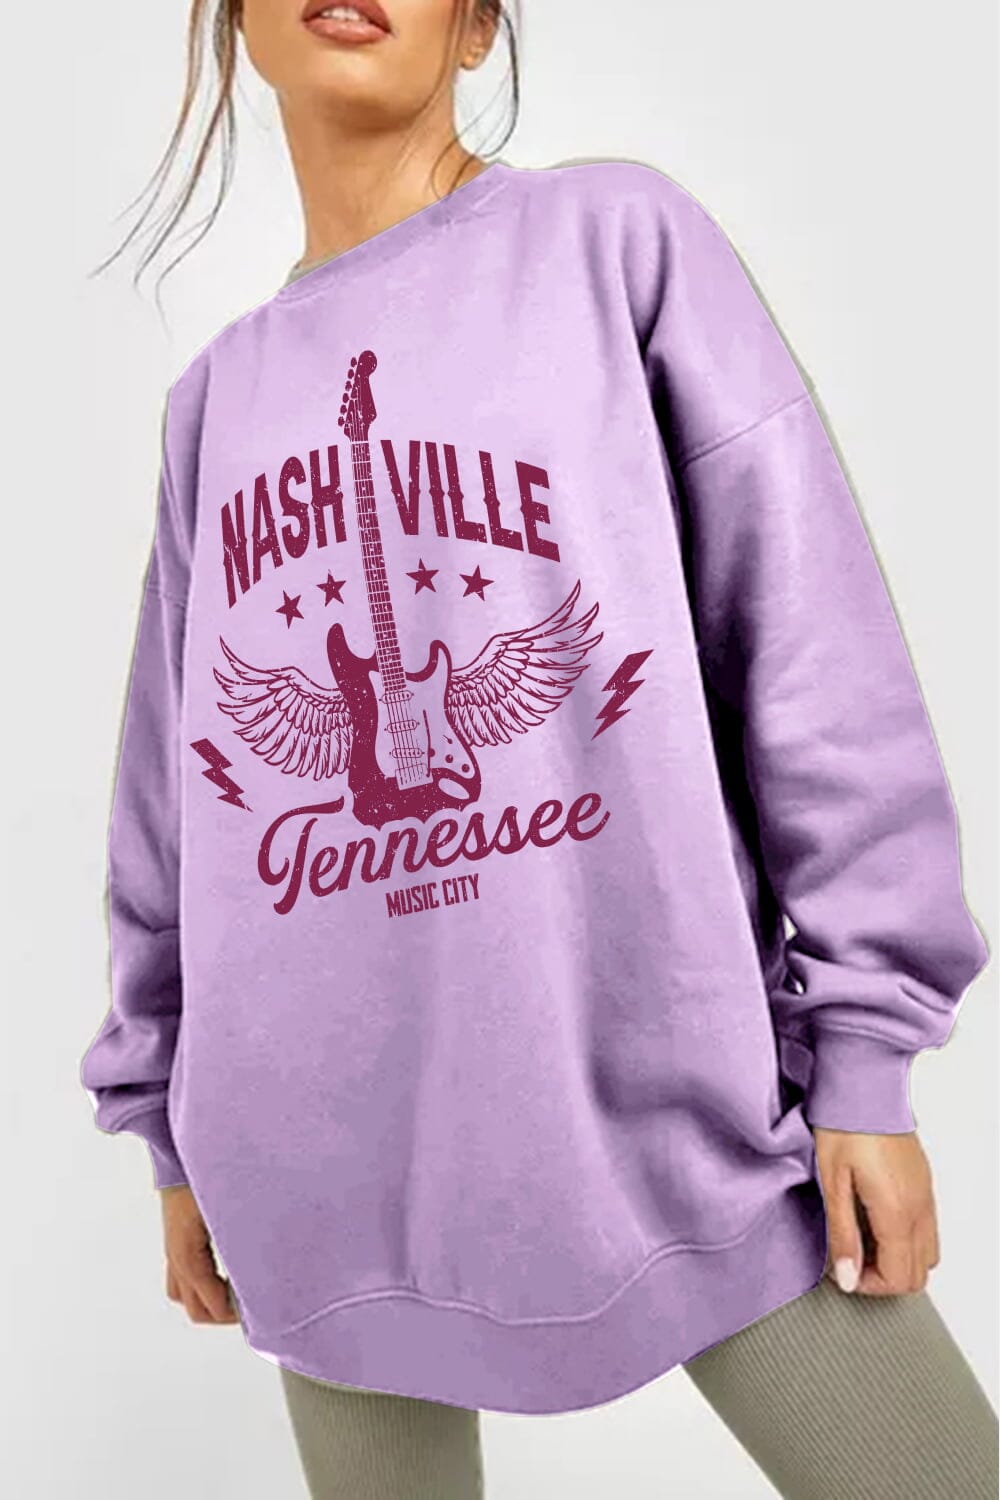 NASHVILLE TENNESSEE MUSIC CITY Graphic Sweatshirt - Sydney So Sweet